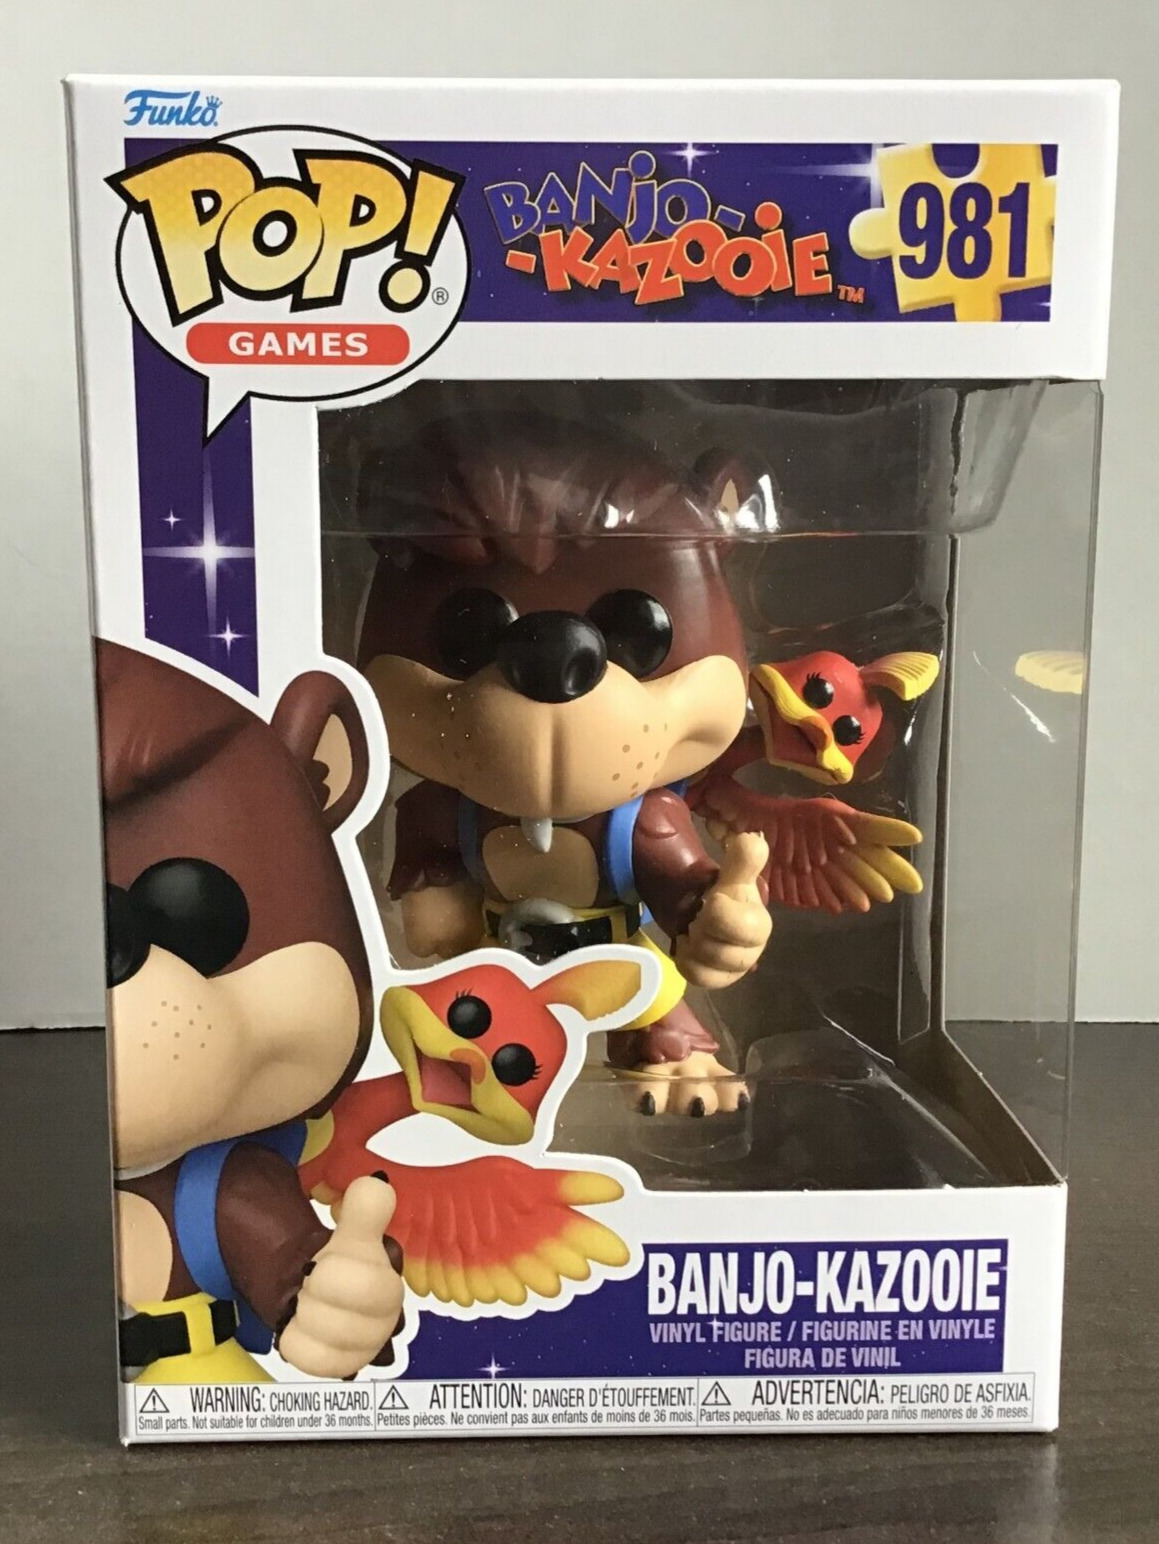 Funko Pop Games Banjo-Kazooie Funko Pop Vinyl Figure #981 In Stock